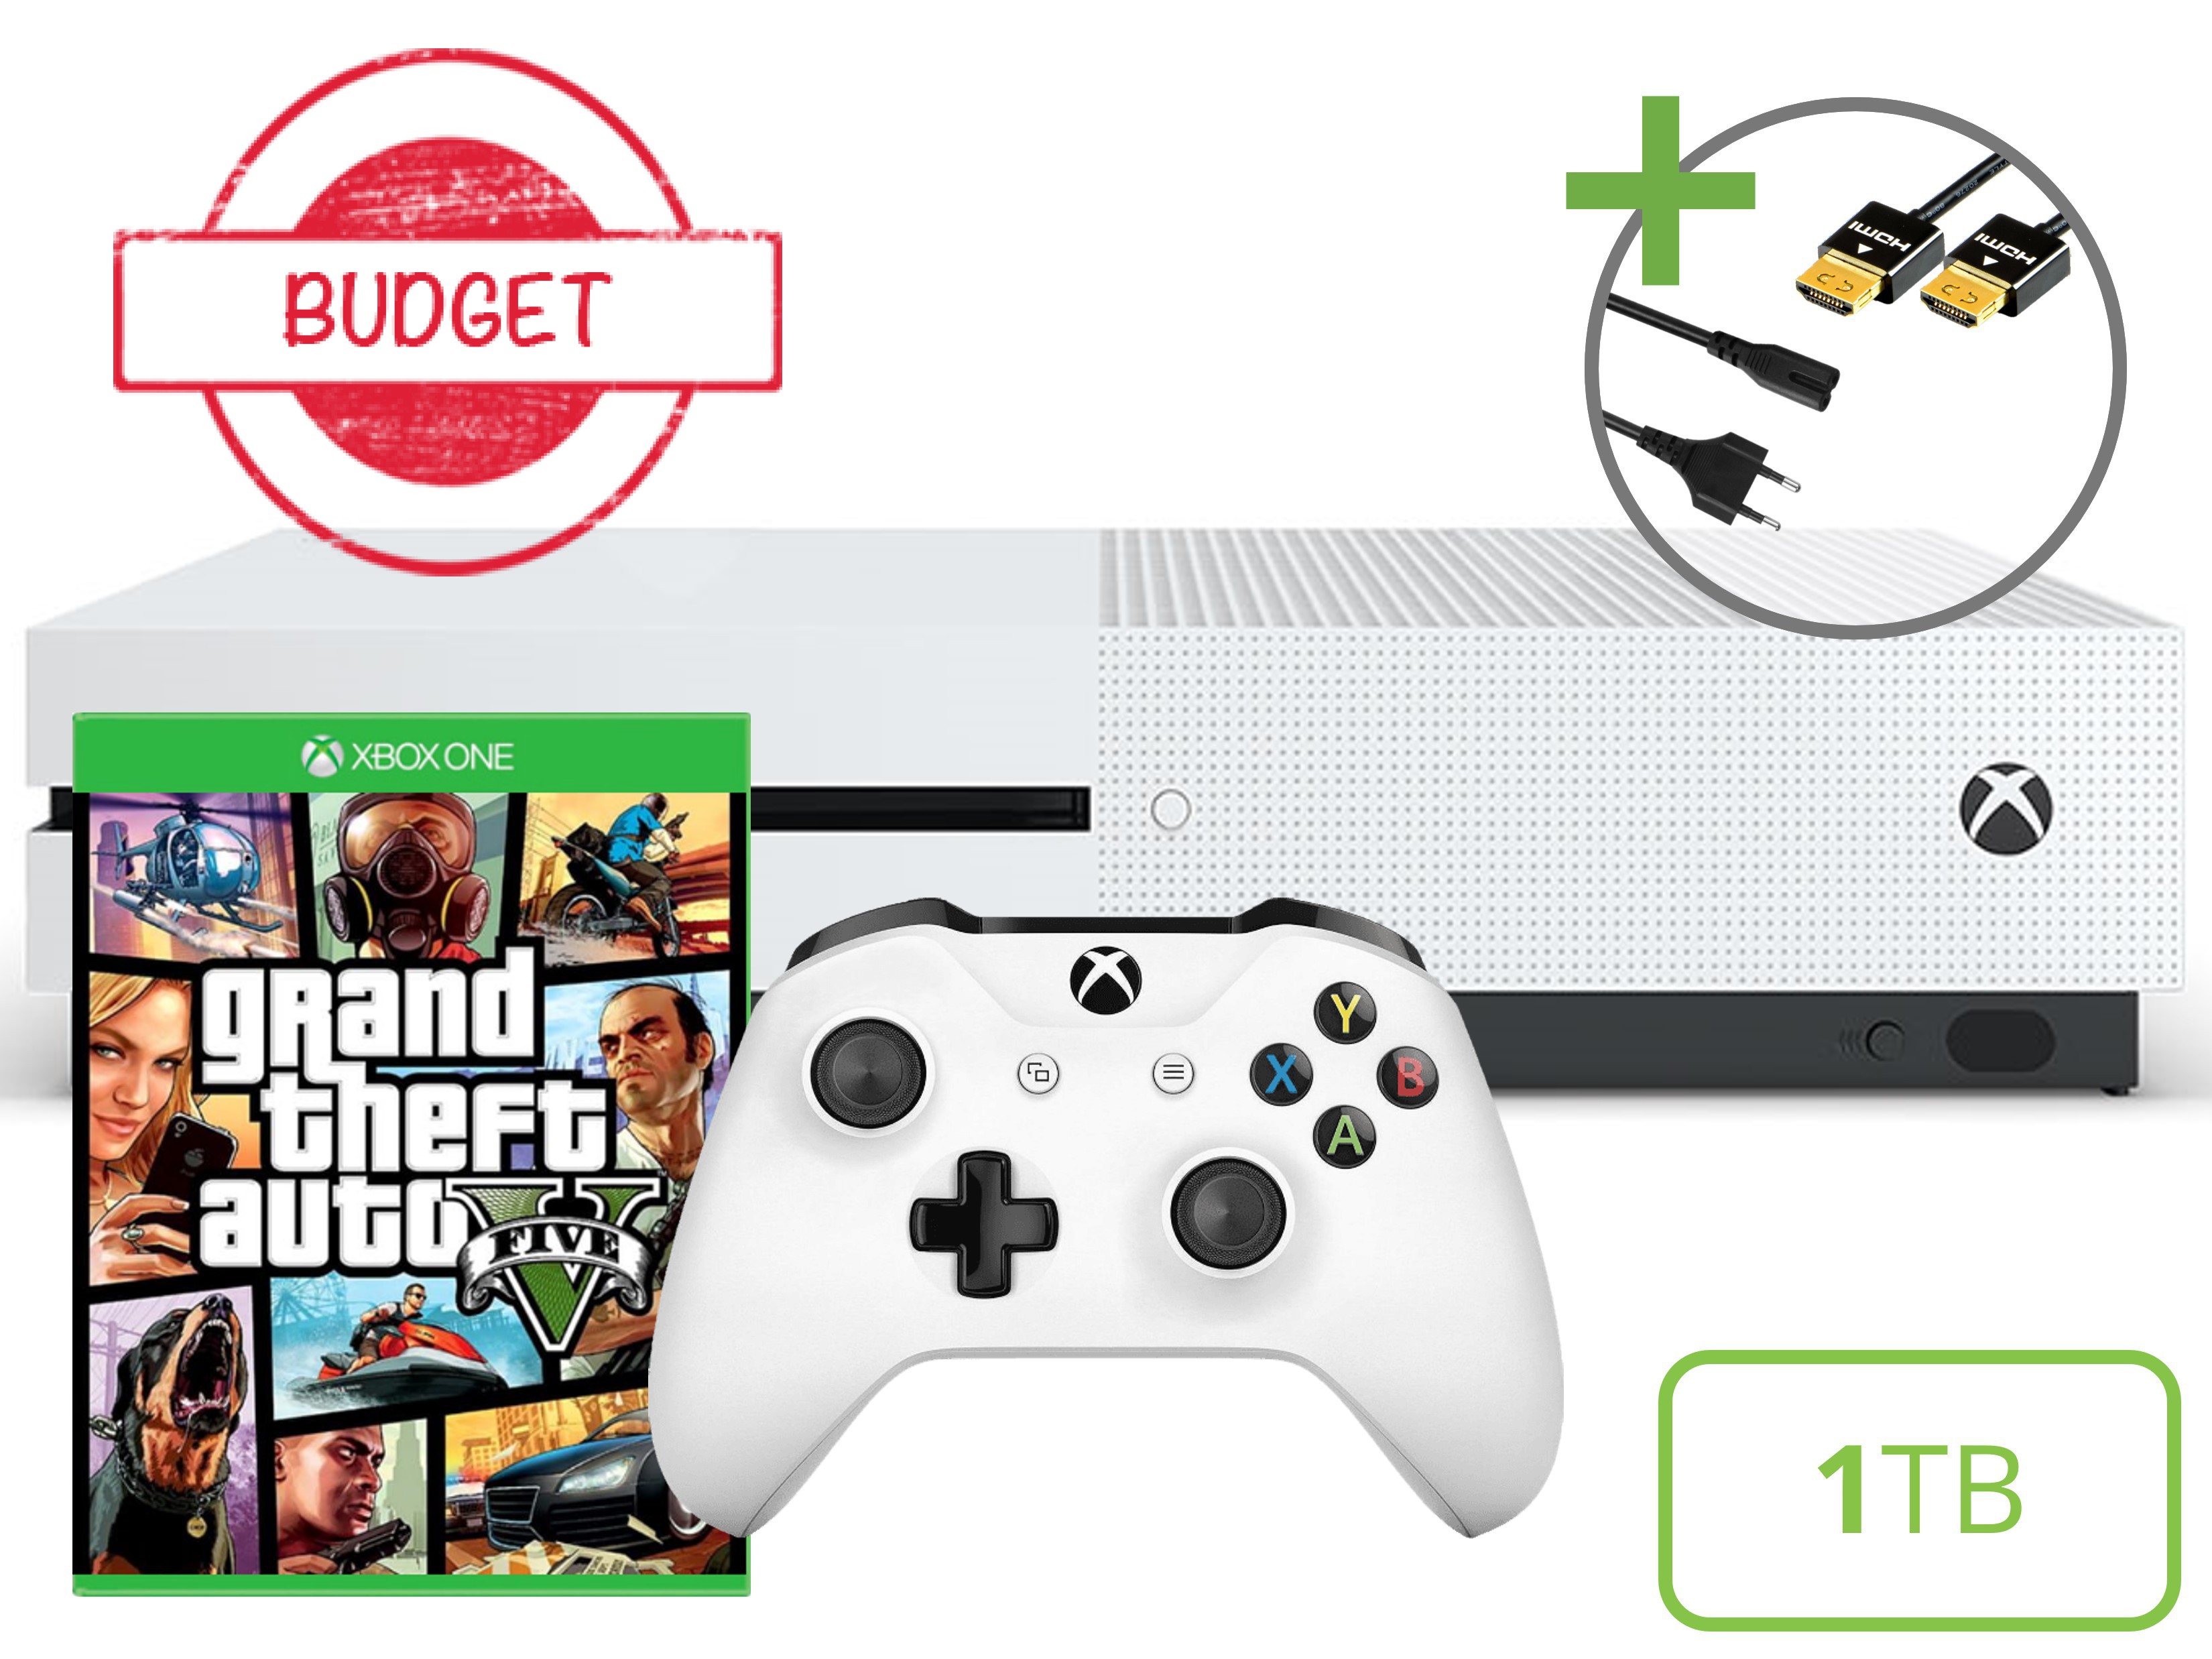 Microsoft Xbox One S Starter Pack - 1TB GTA V Edition - Budget - Xbox One Hardware